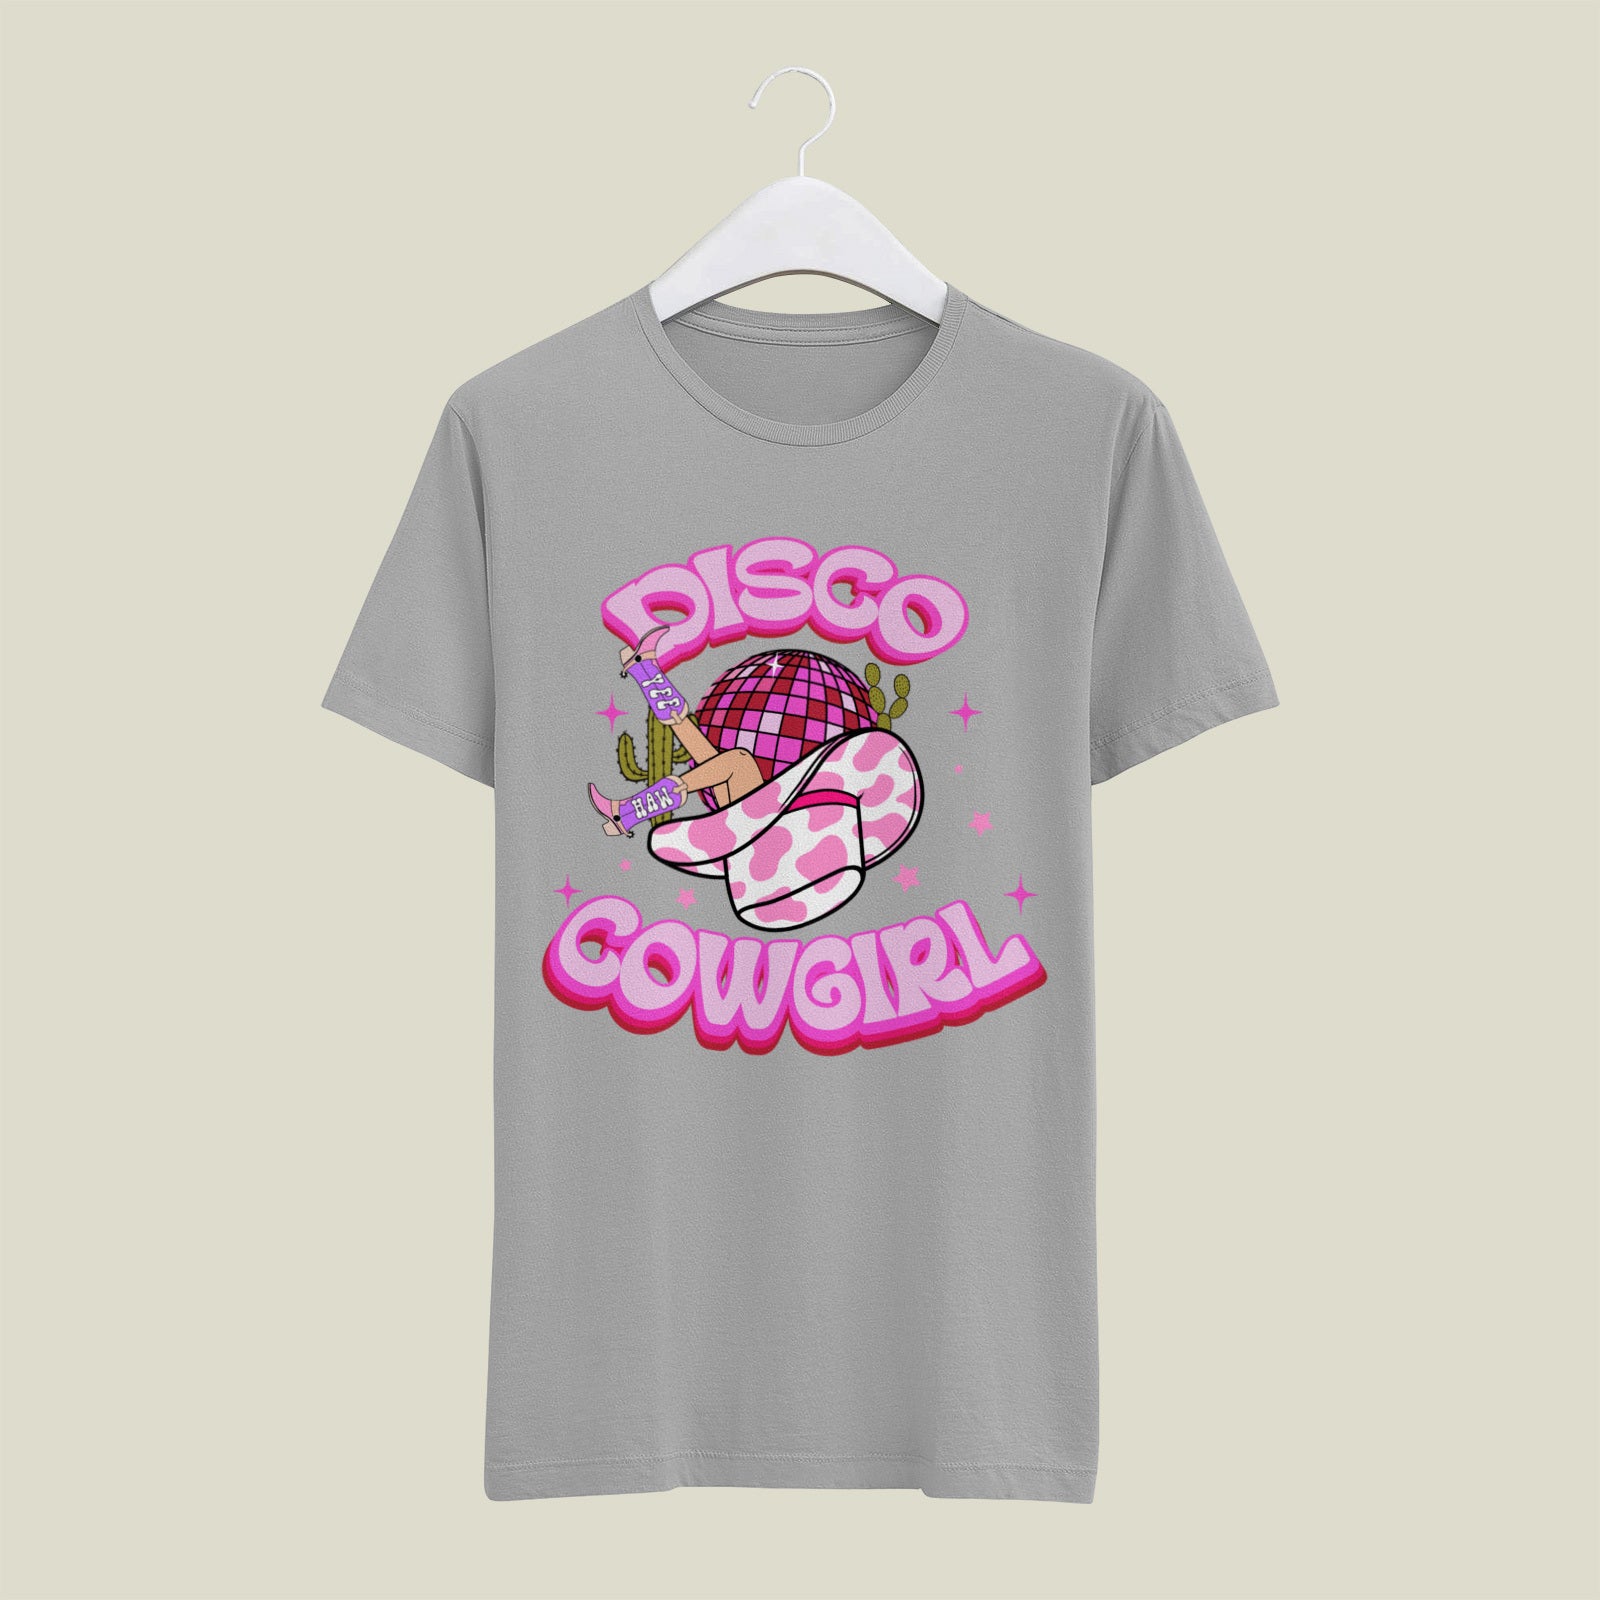 Disco Cowgirl T-Shirt